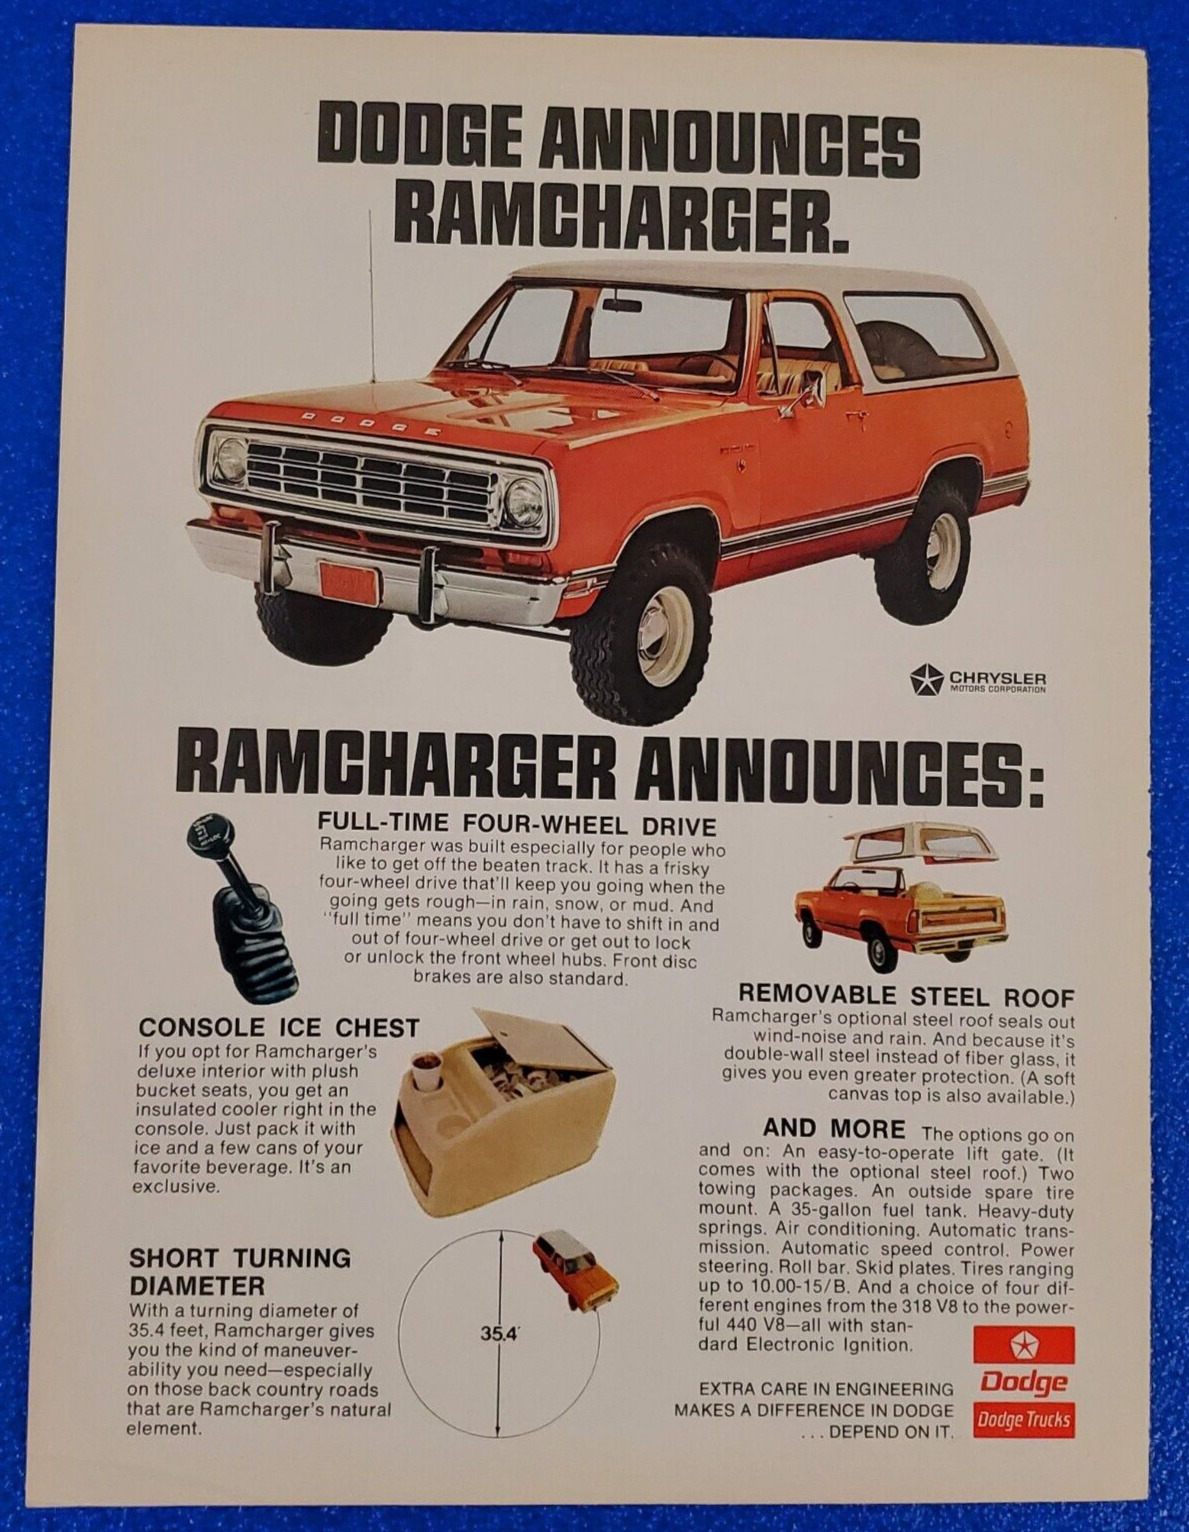 1974 DODGE RAMCHARGER FULL-TIME FOUR-WHEEL DRIVE ORIGINAL PRINT AD DODGE TRUCKS